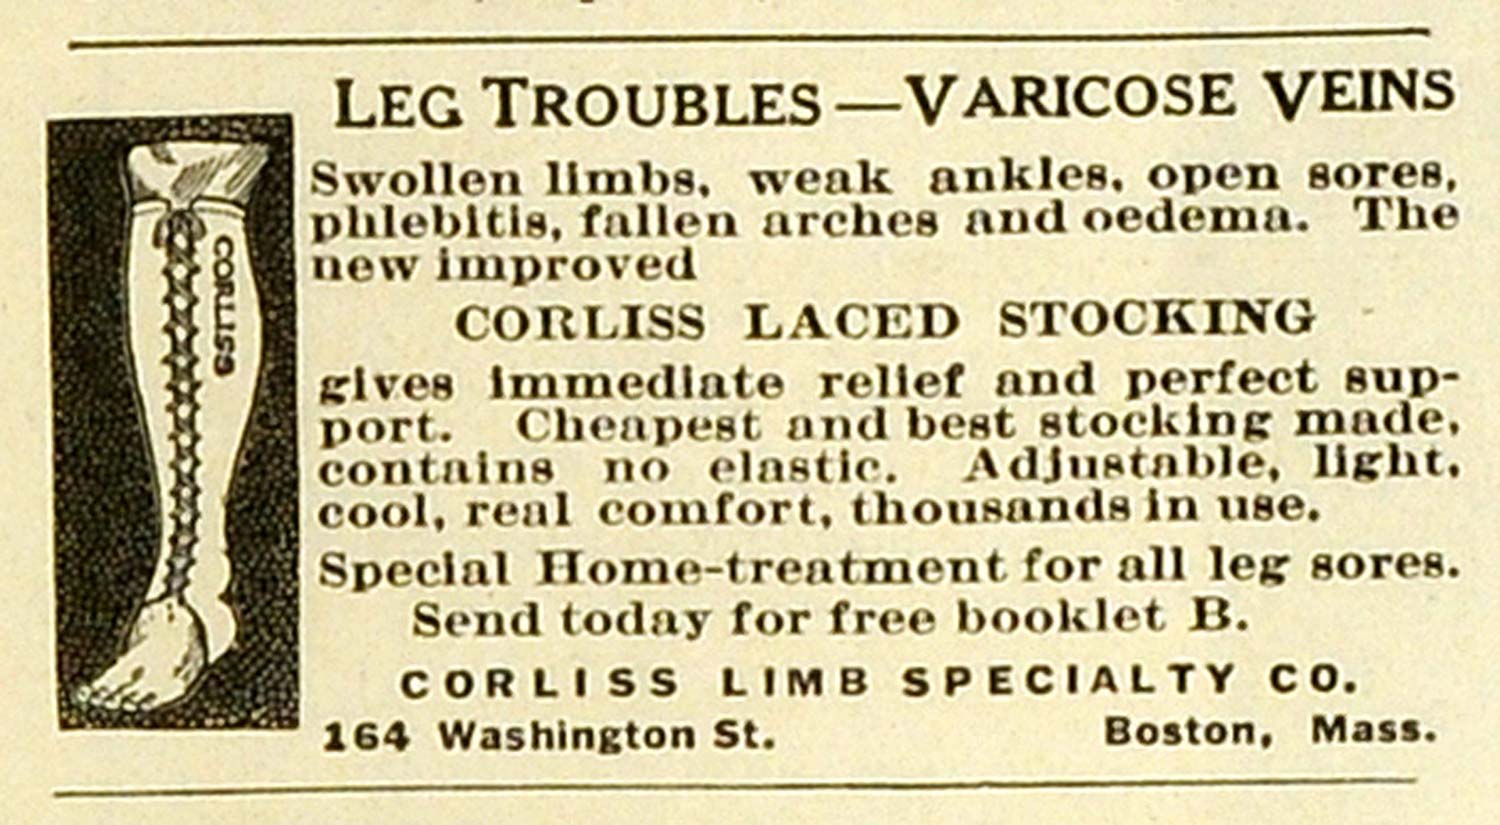 1923 Ad Corliss Limb Specialty Laced Stocking Leg Problems Varicose Veins MPR1